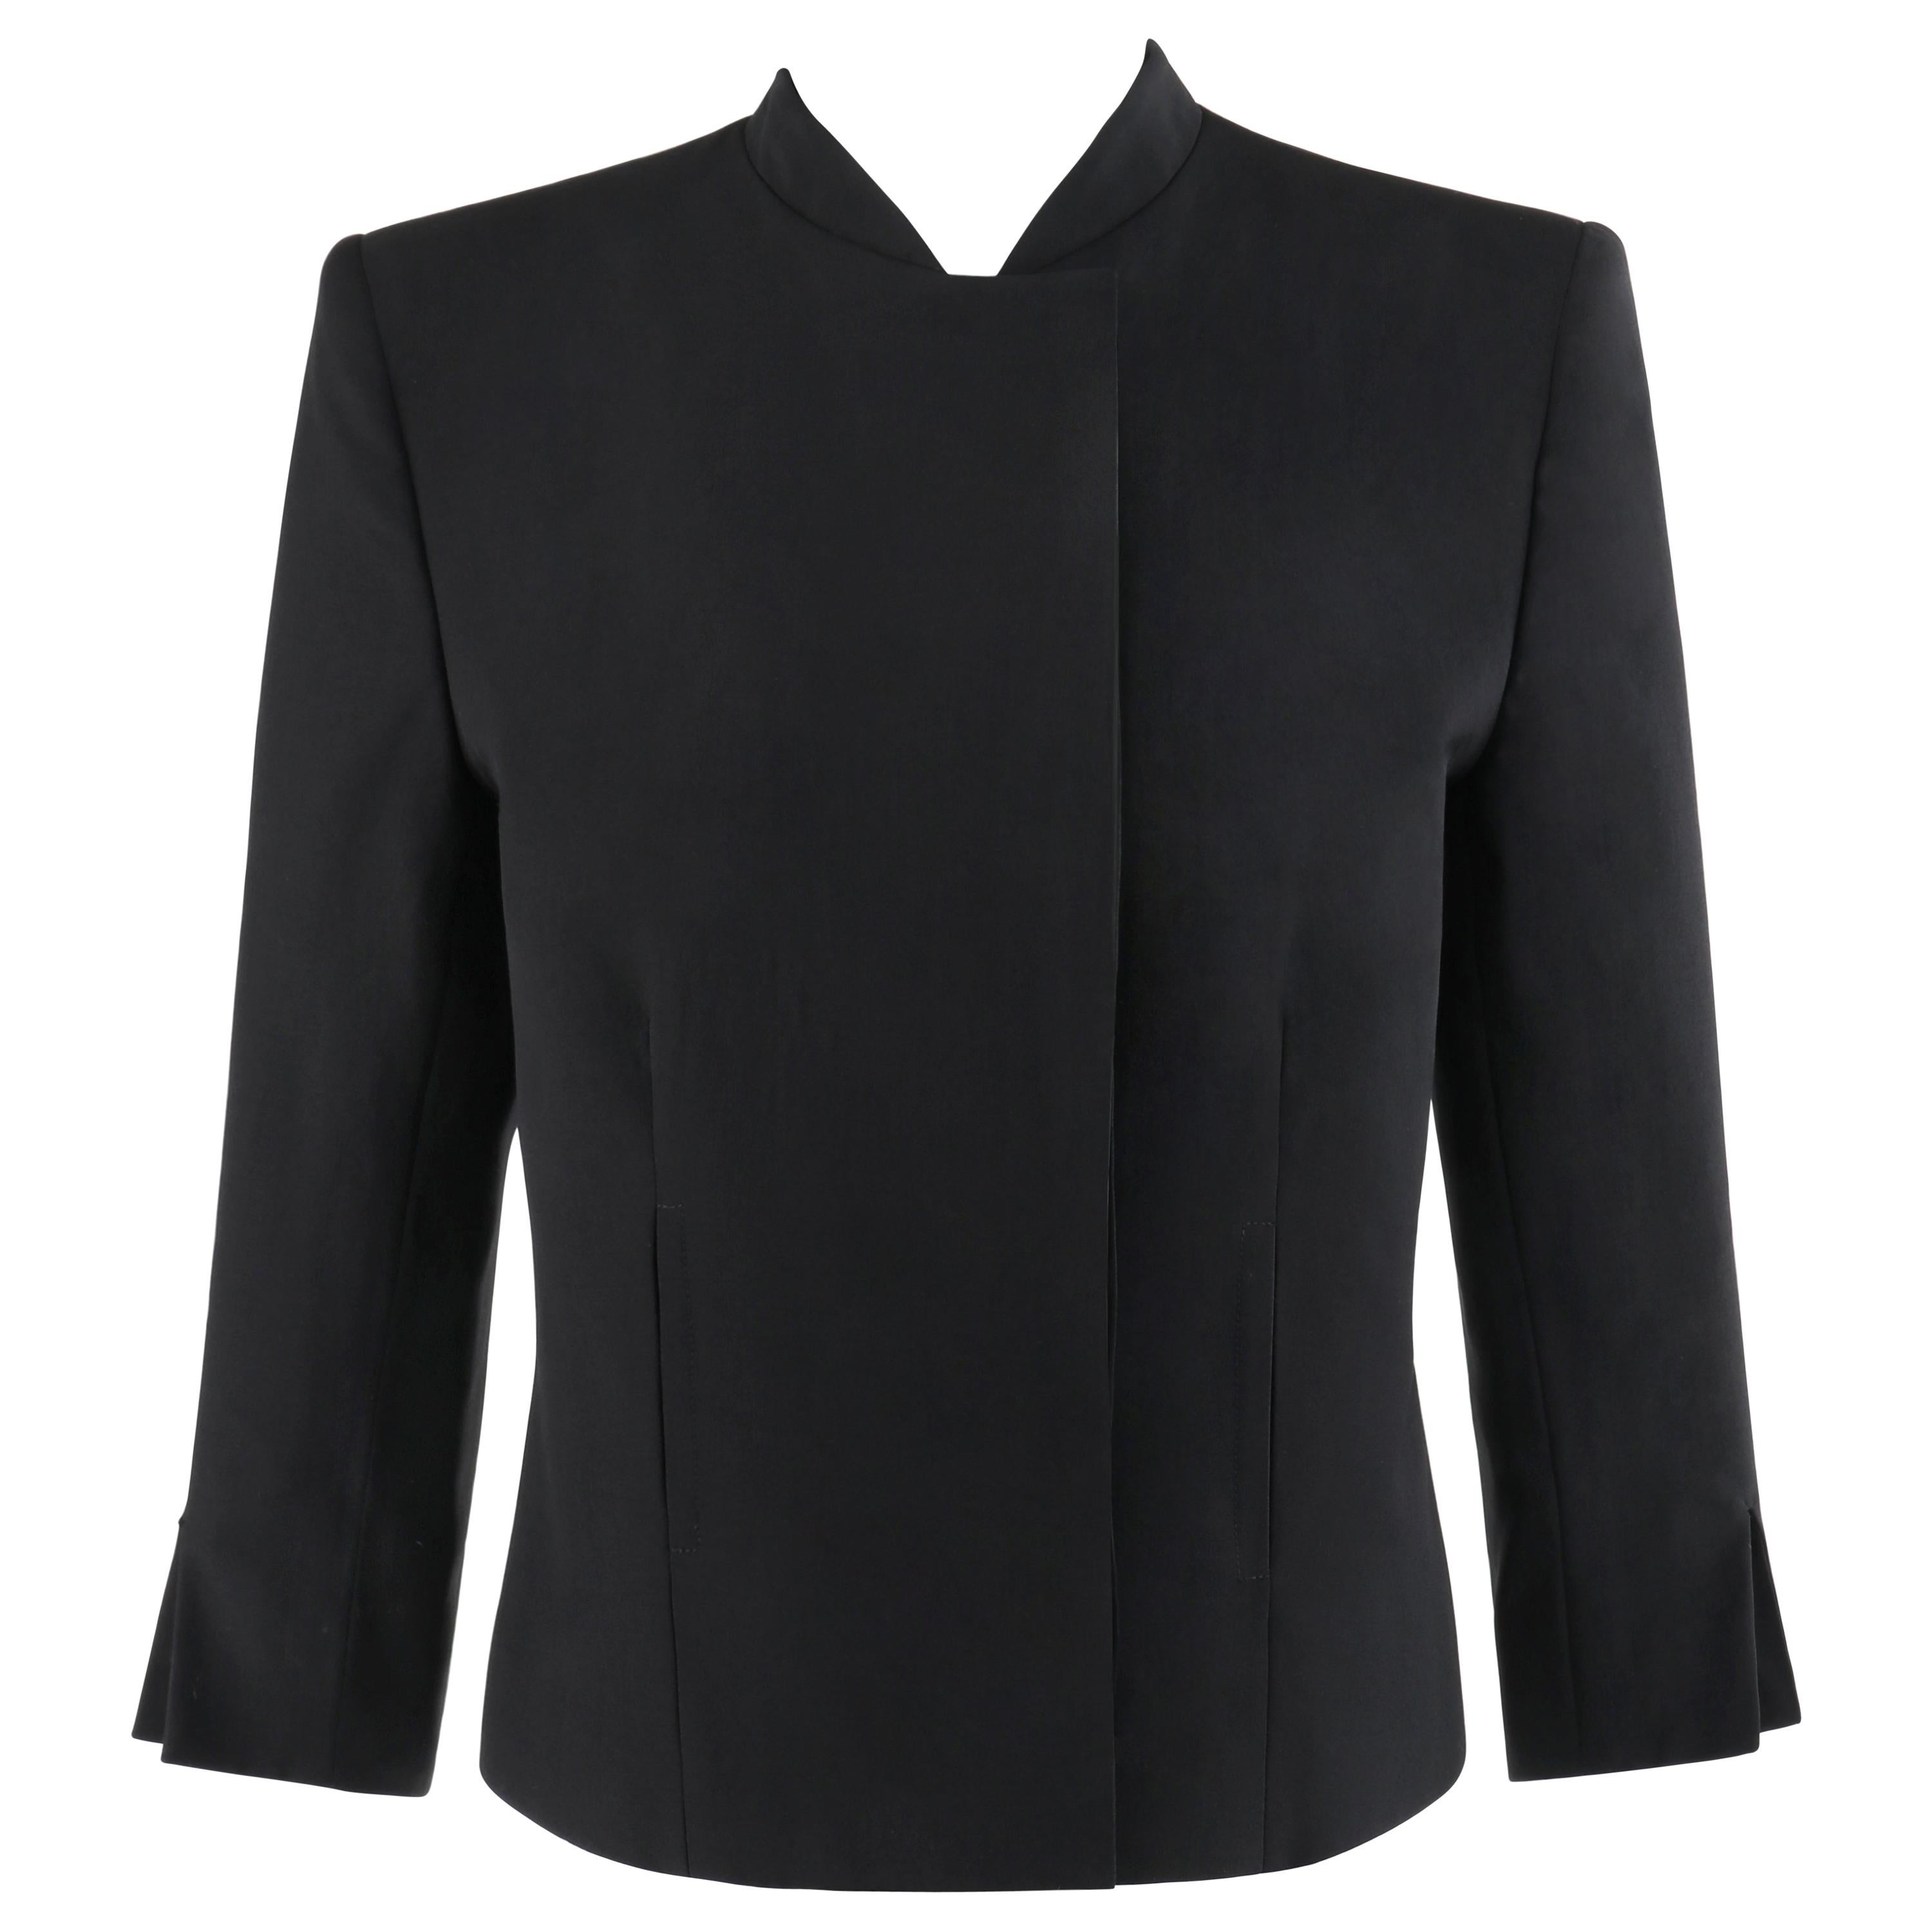 ALEXANDER McQUEEN S/S 1999 “No. 13” Black Extended Shoulder Blazer Jacket Sz 40 For Sale